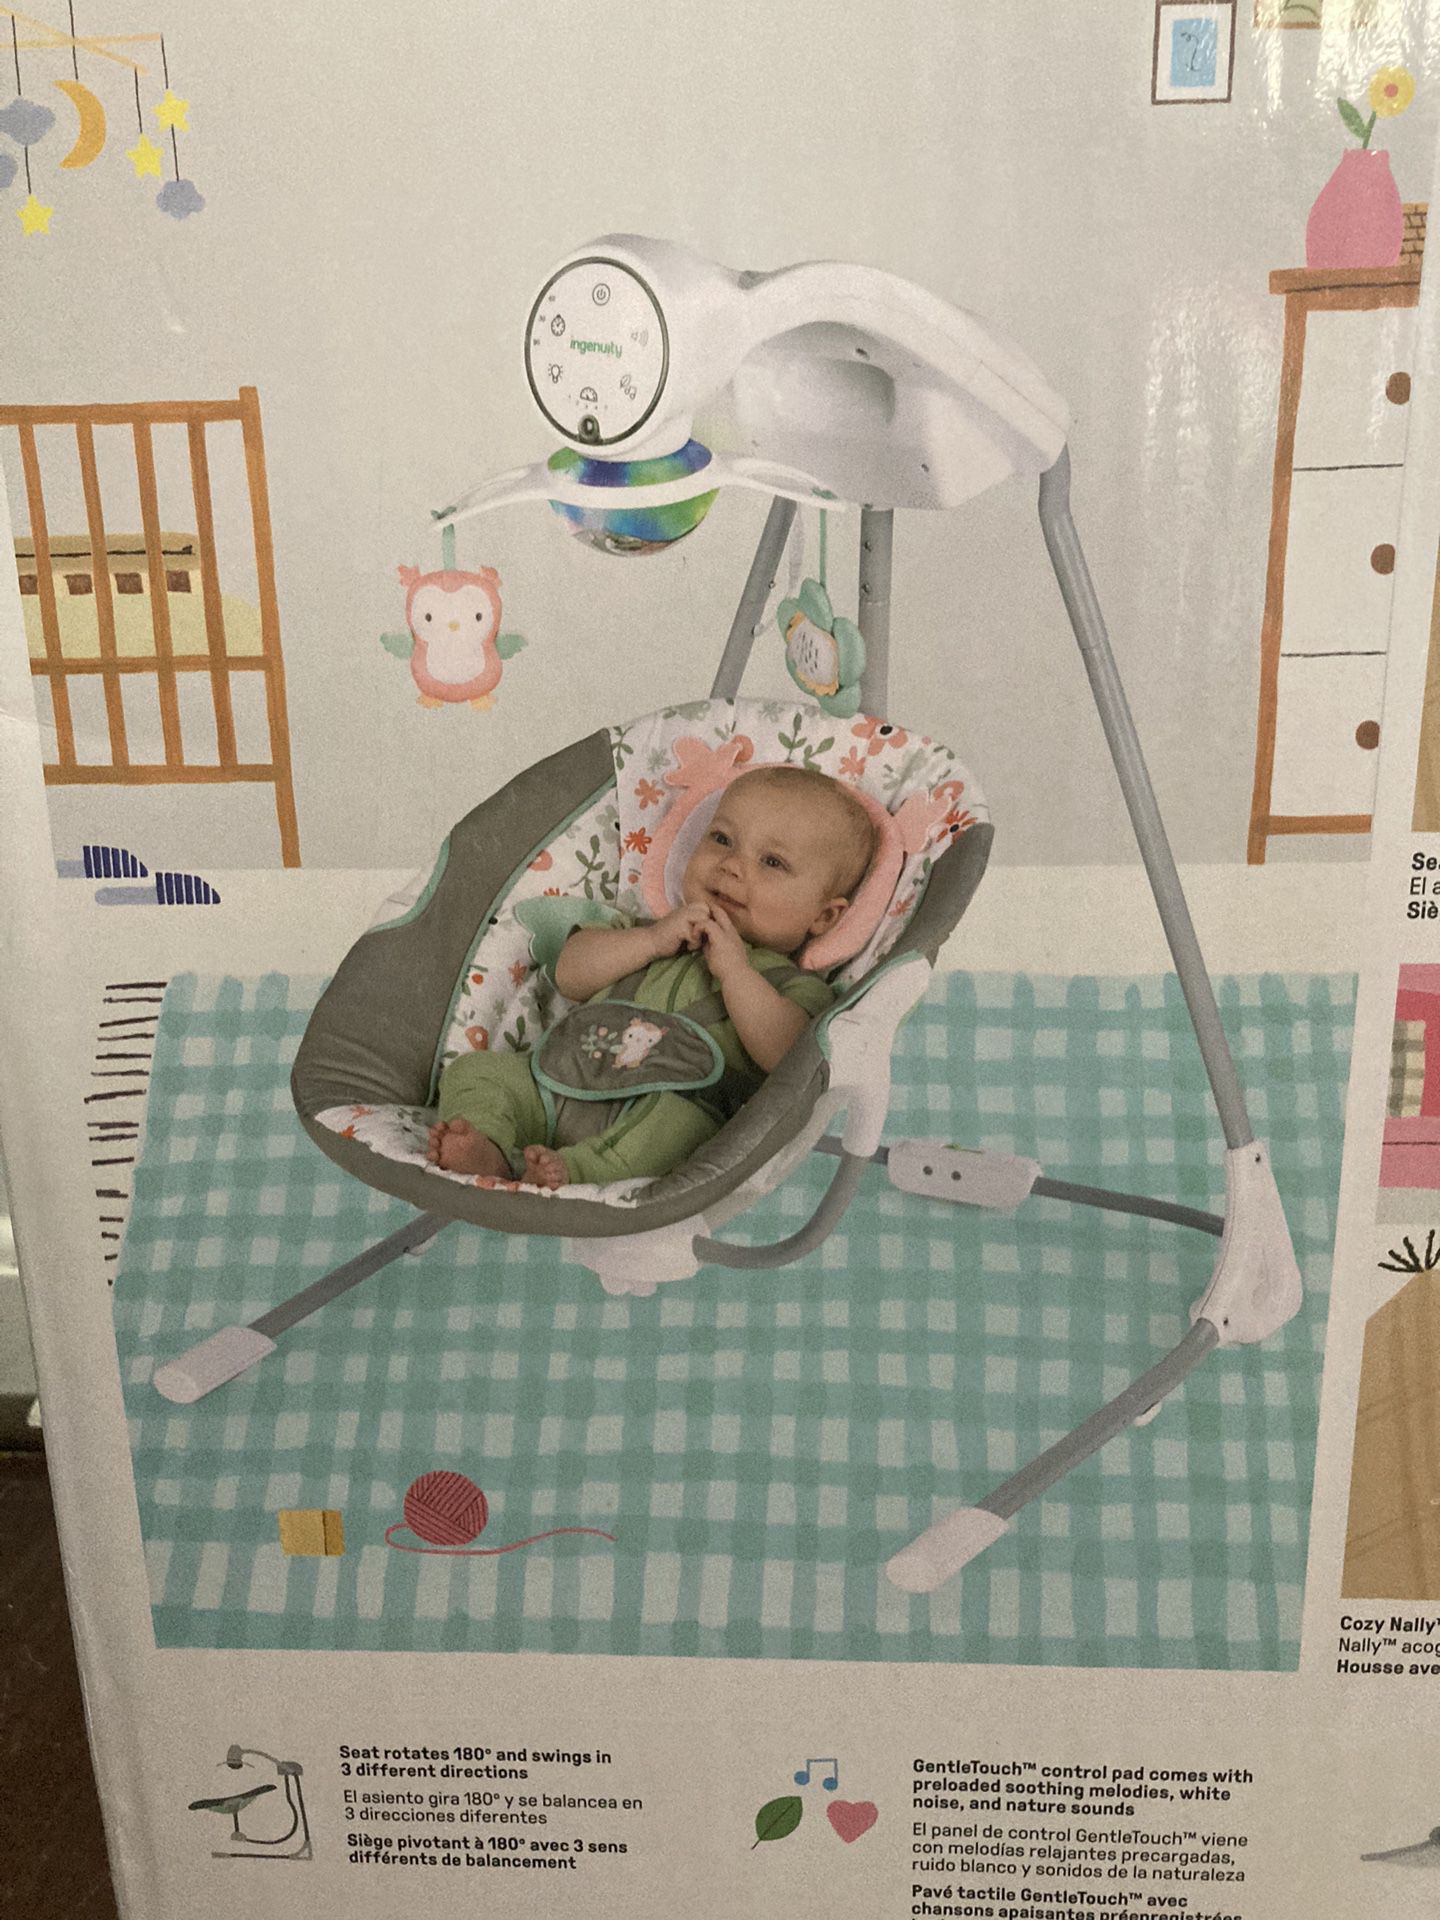 Ingenuity Baby Swing 